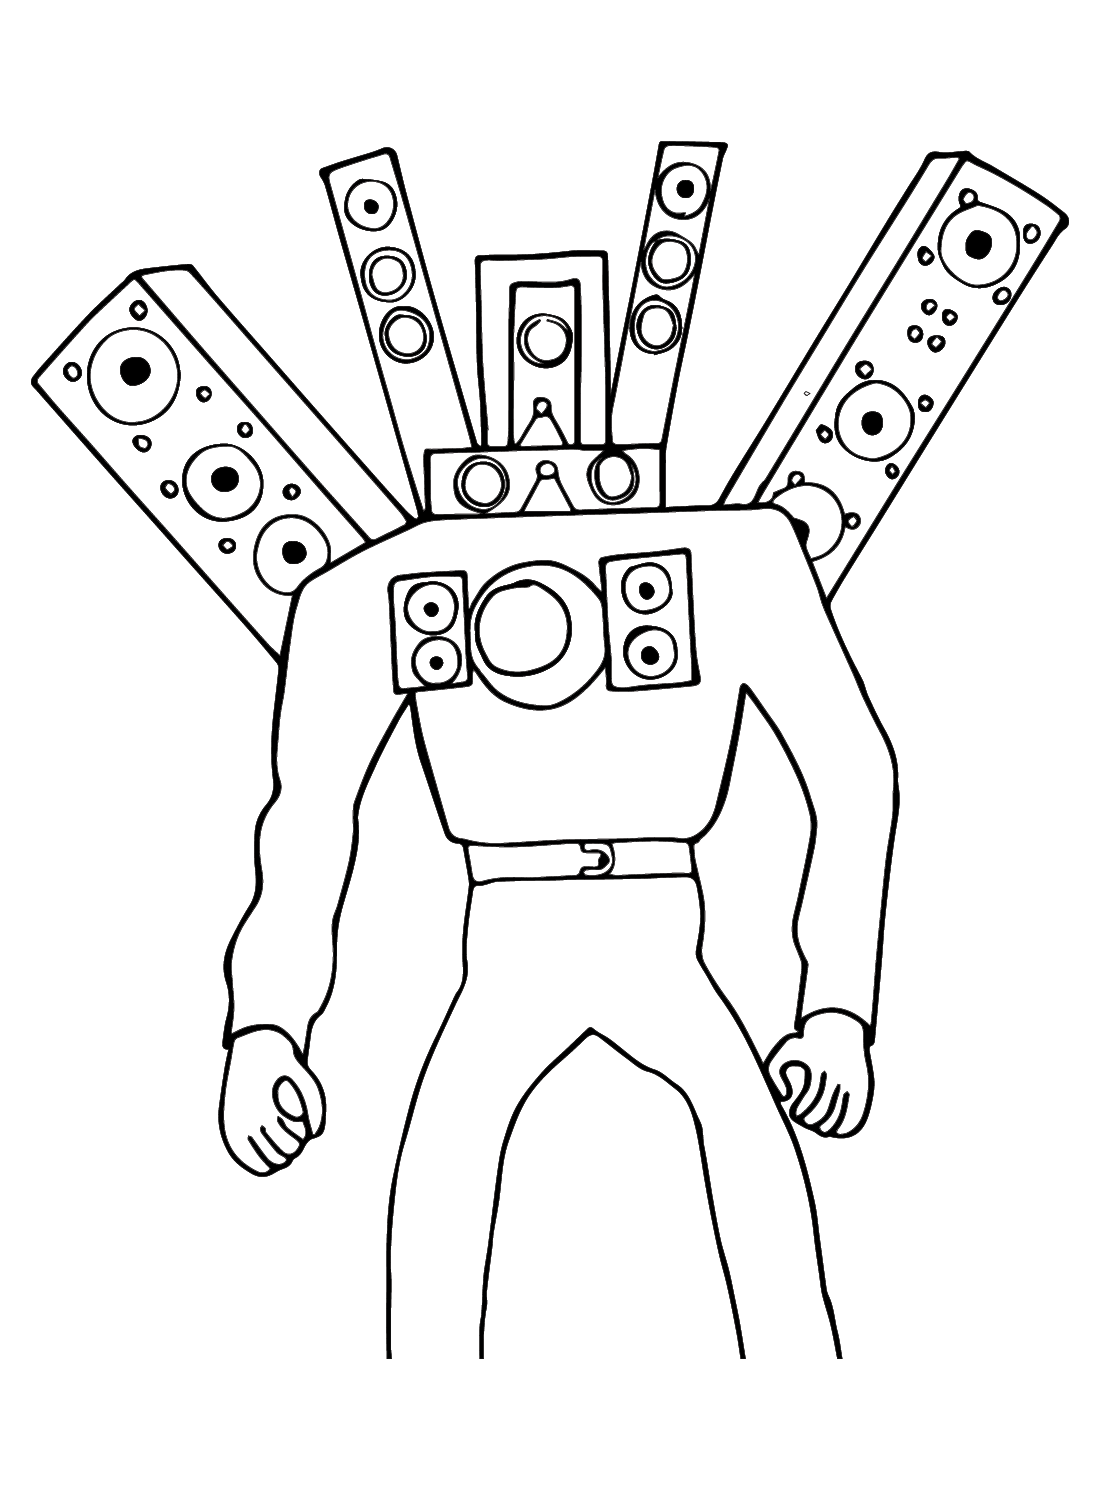 Titan Speakerman Picture to Color from Titan Speakerman